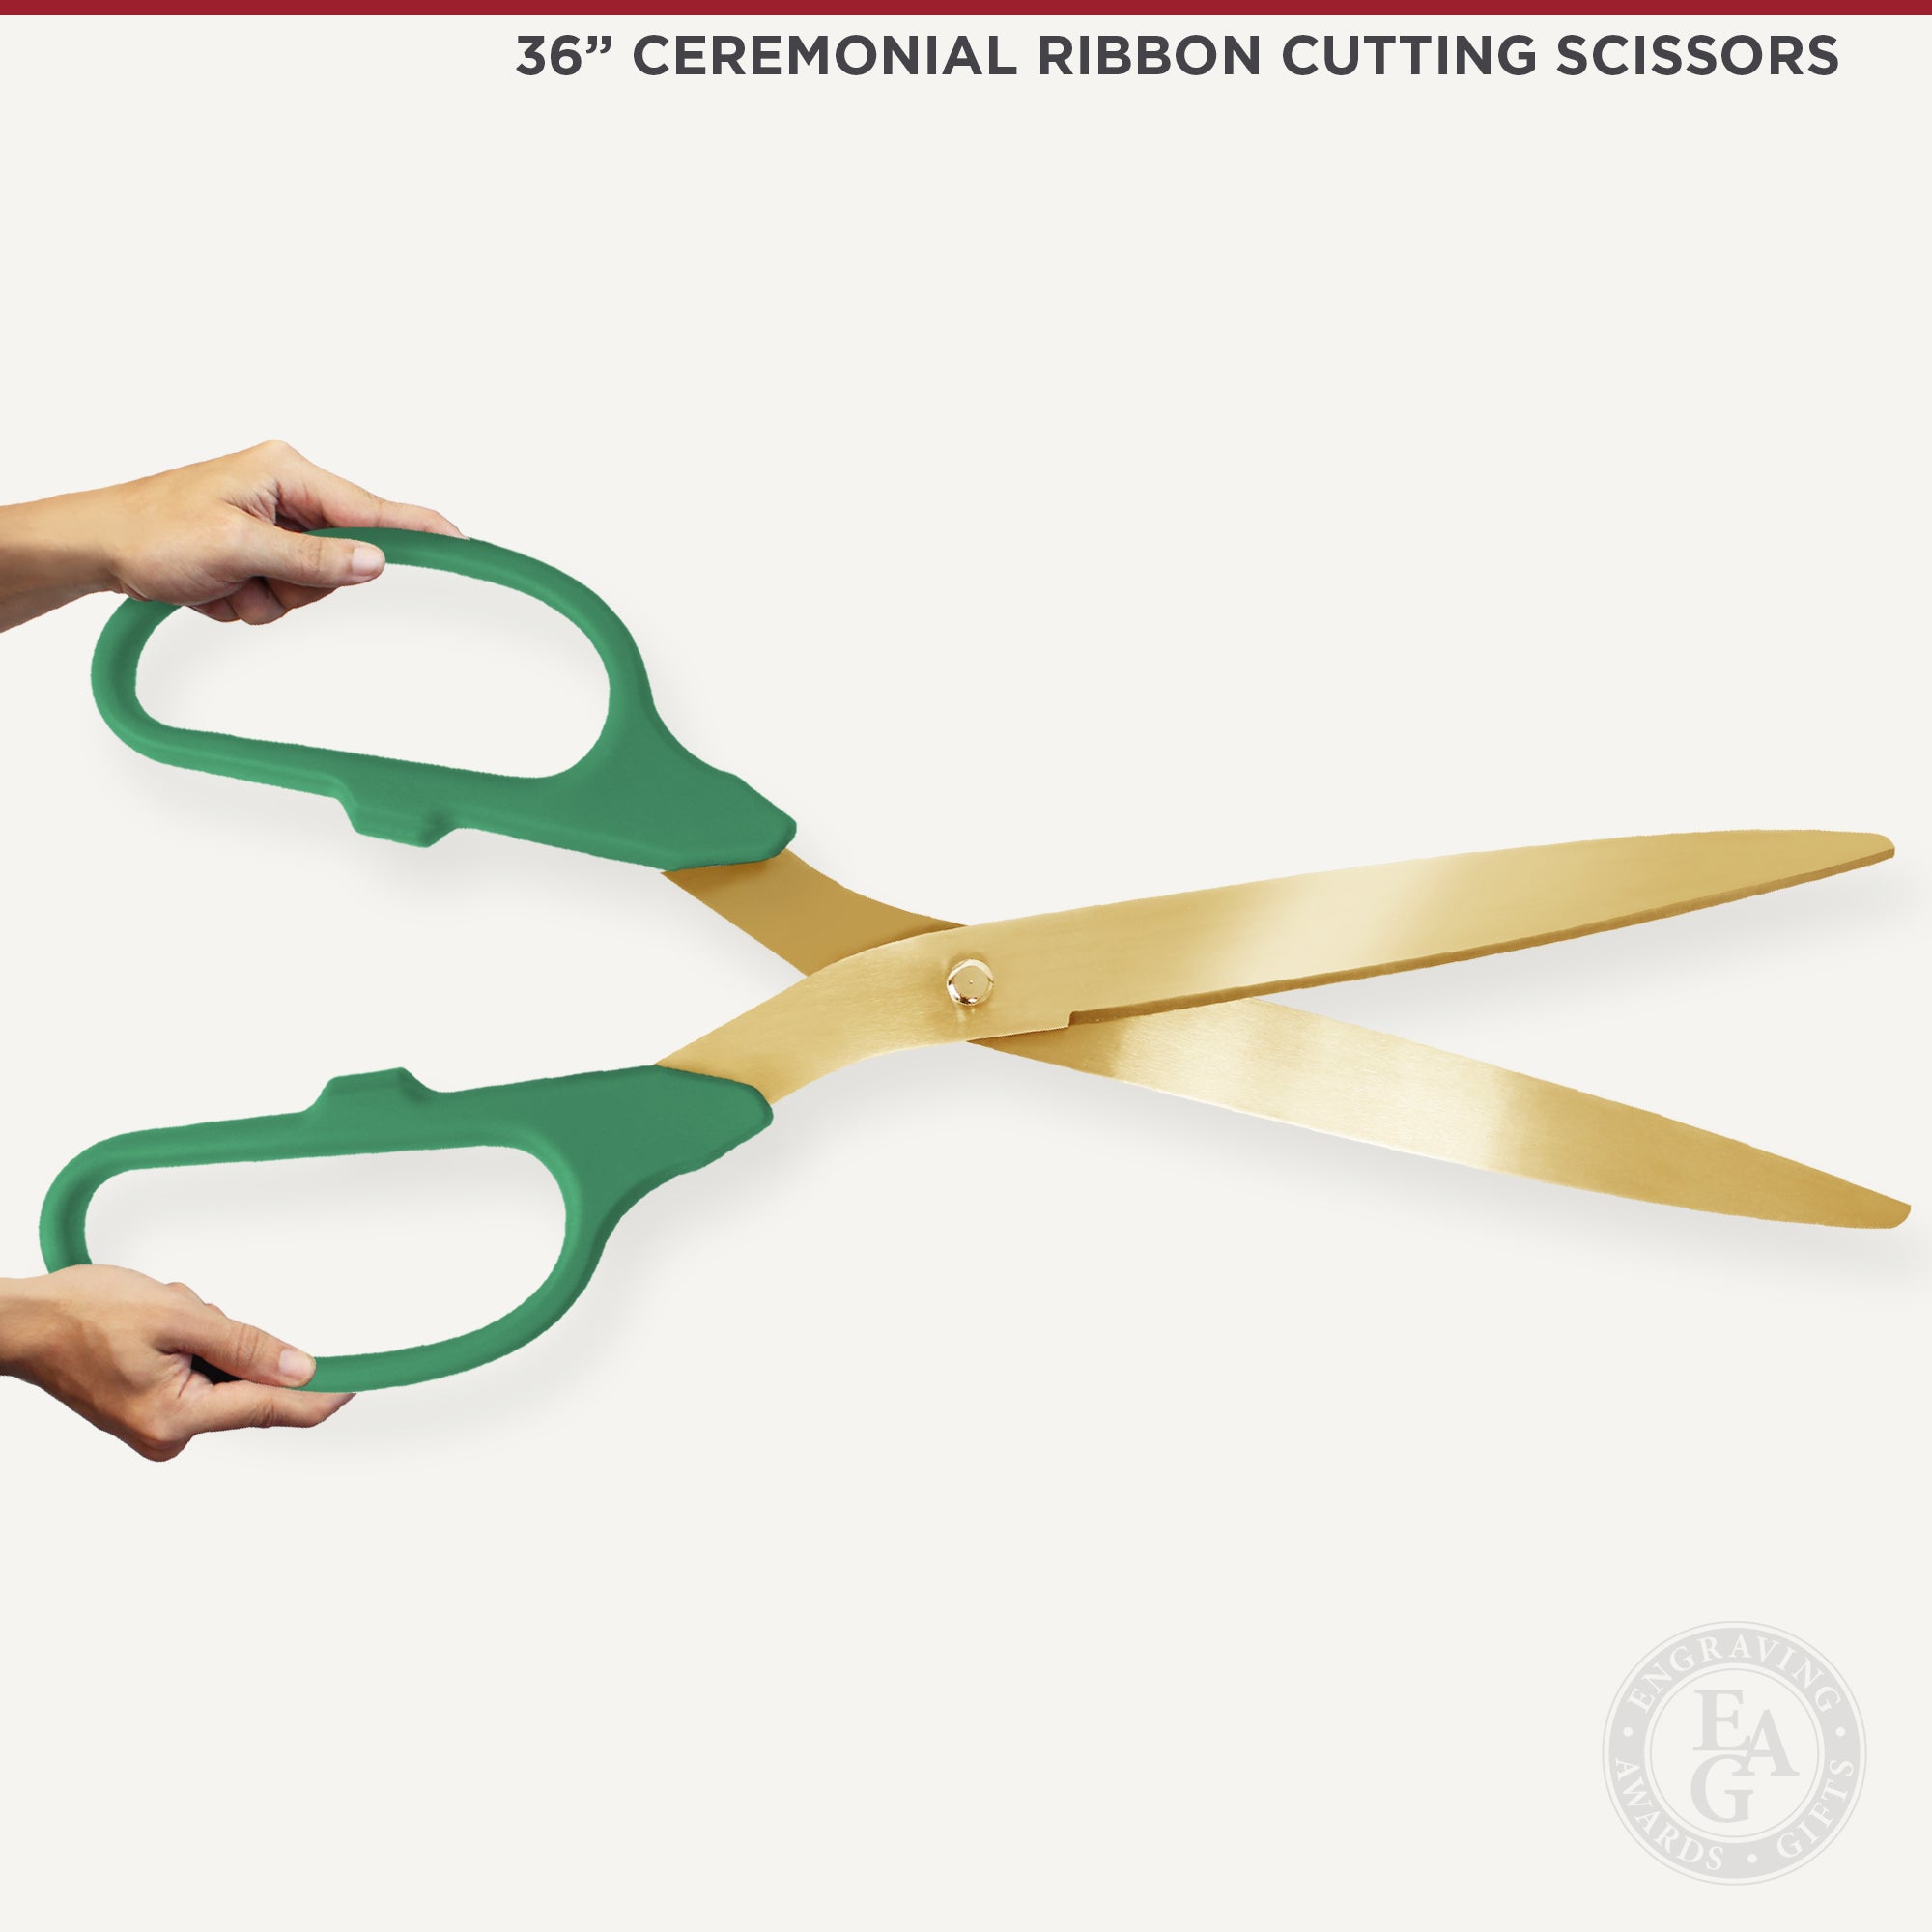 Giant Scissors Graphics for Ribbon Cutting at Temple Judea in Tarzana